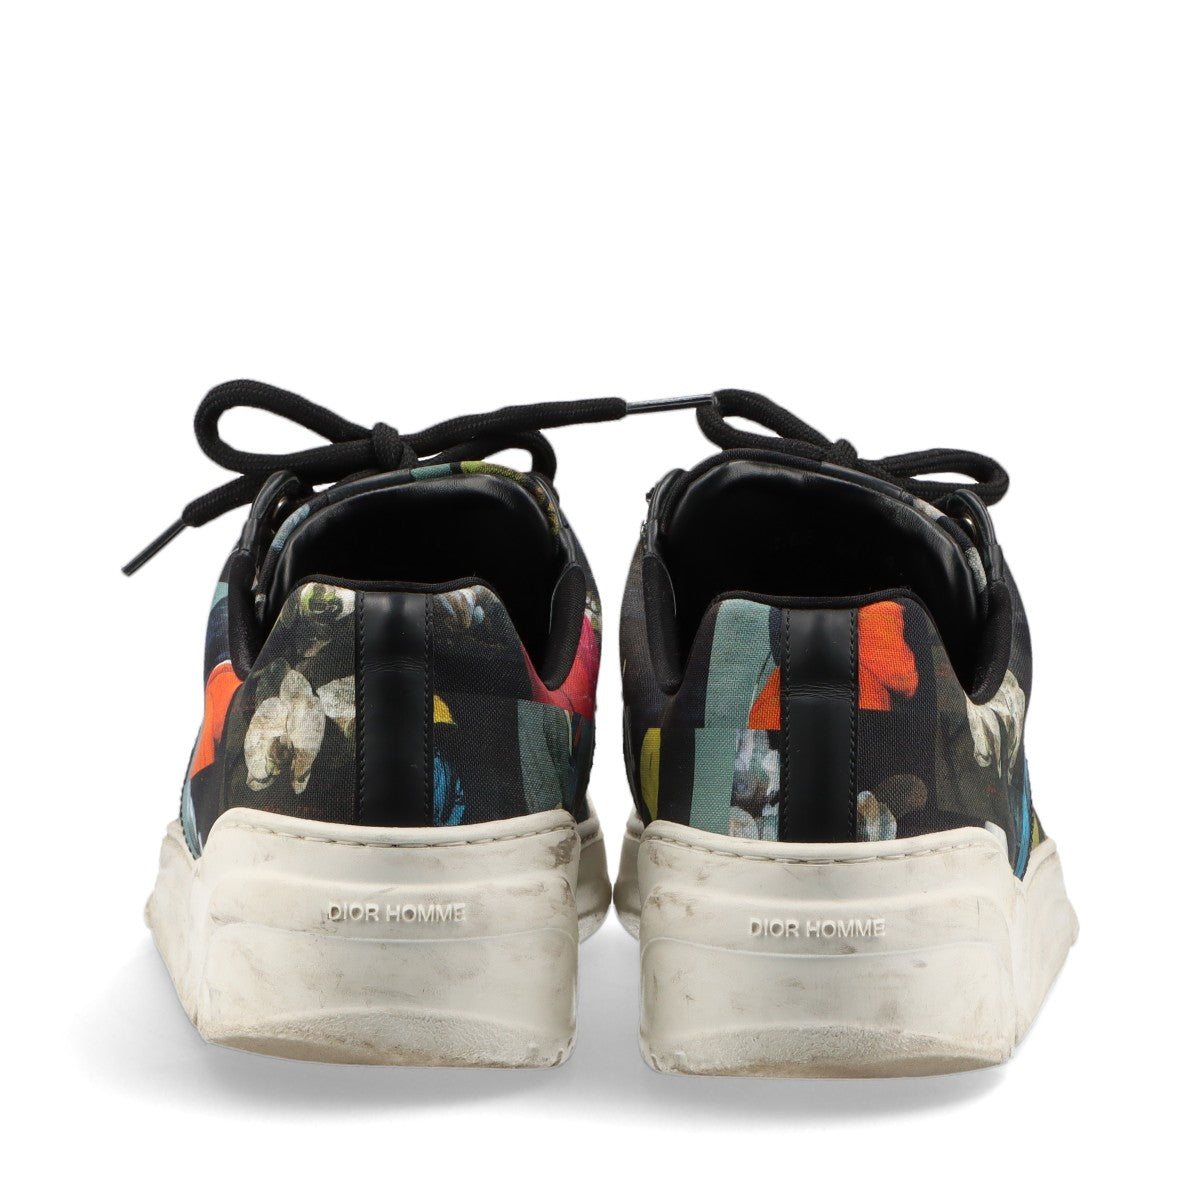 DIOR HOMME B17 canvas Sneakers 41 Men's Multicolor 18ELI Print Analog-digital